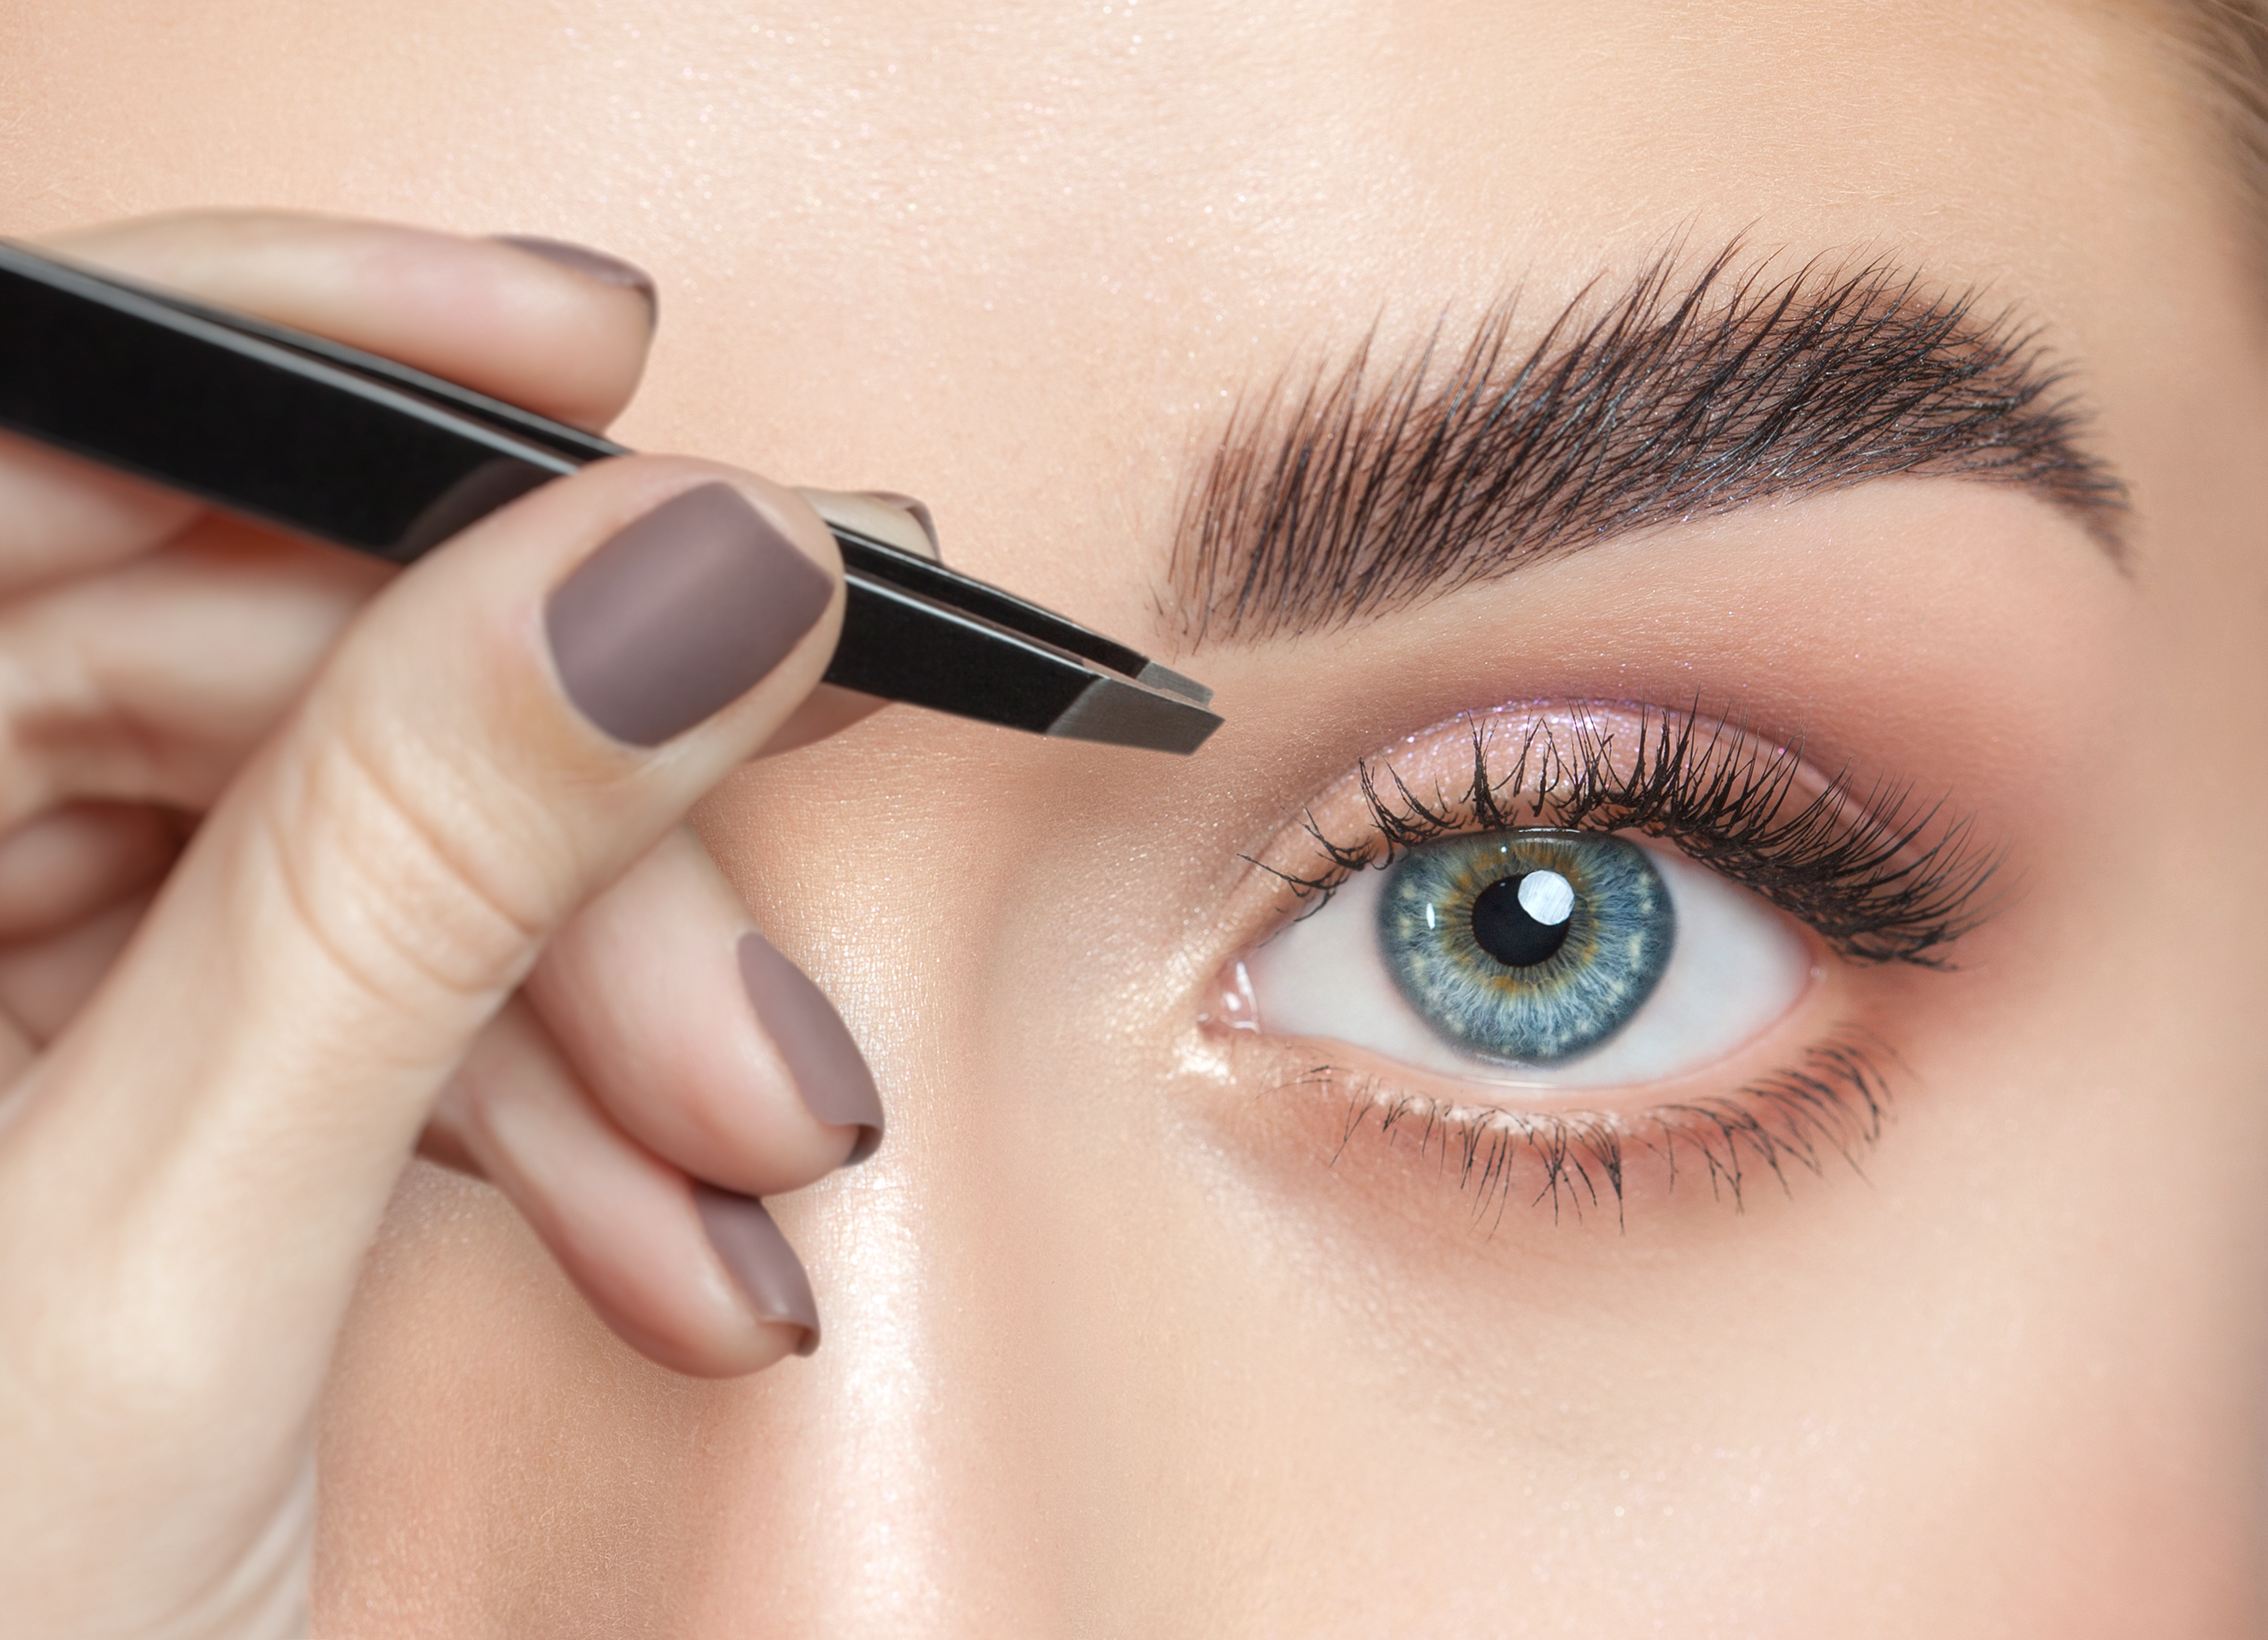 Woman plucking eyebrows | Source: Shutterstock